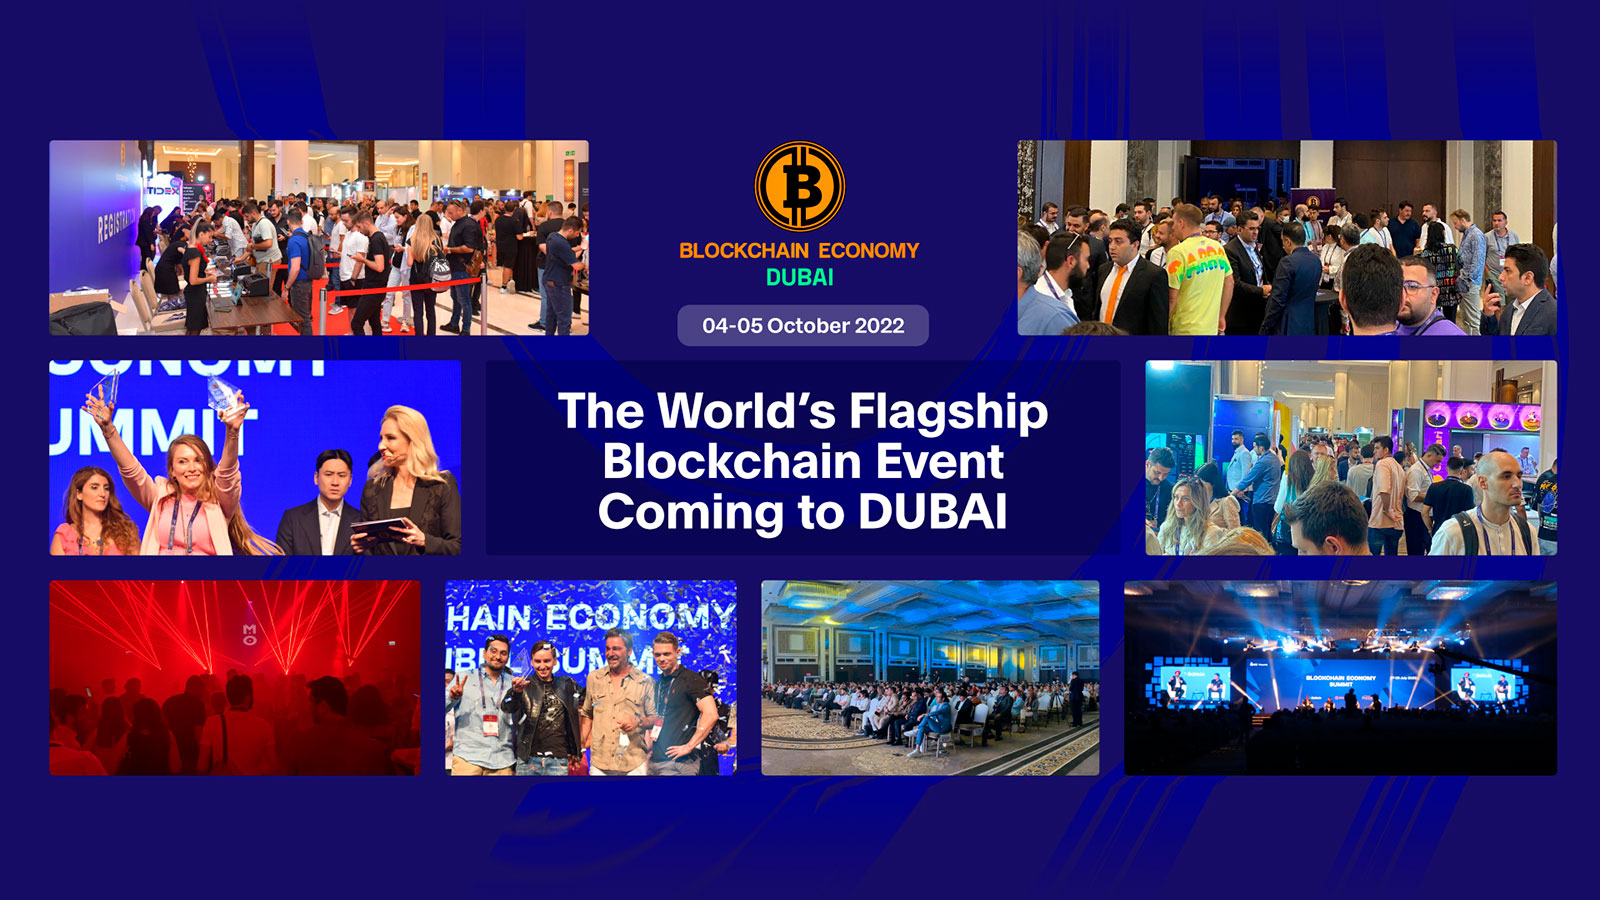 The World’s Flagship Blockchain Event Coming to DUBAI